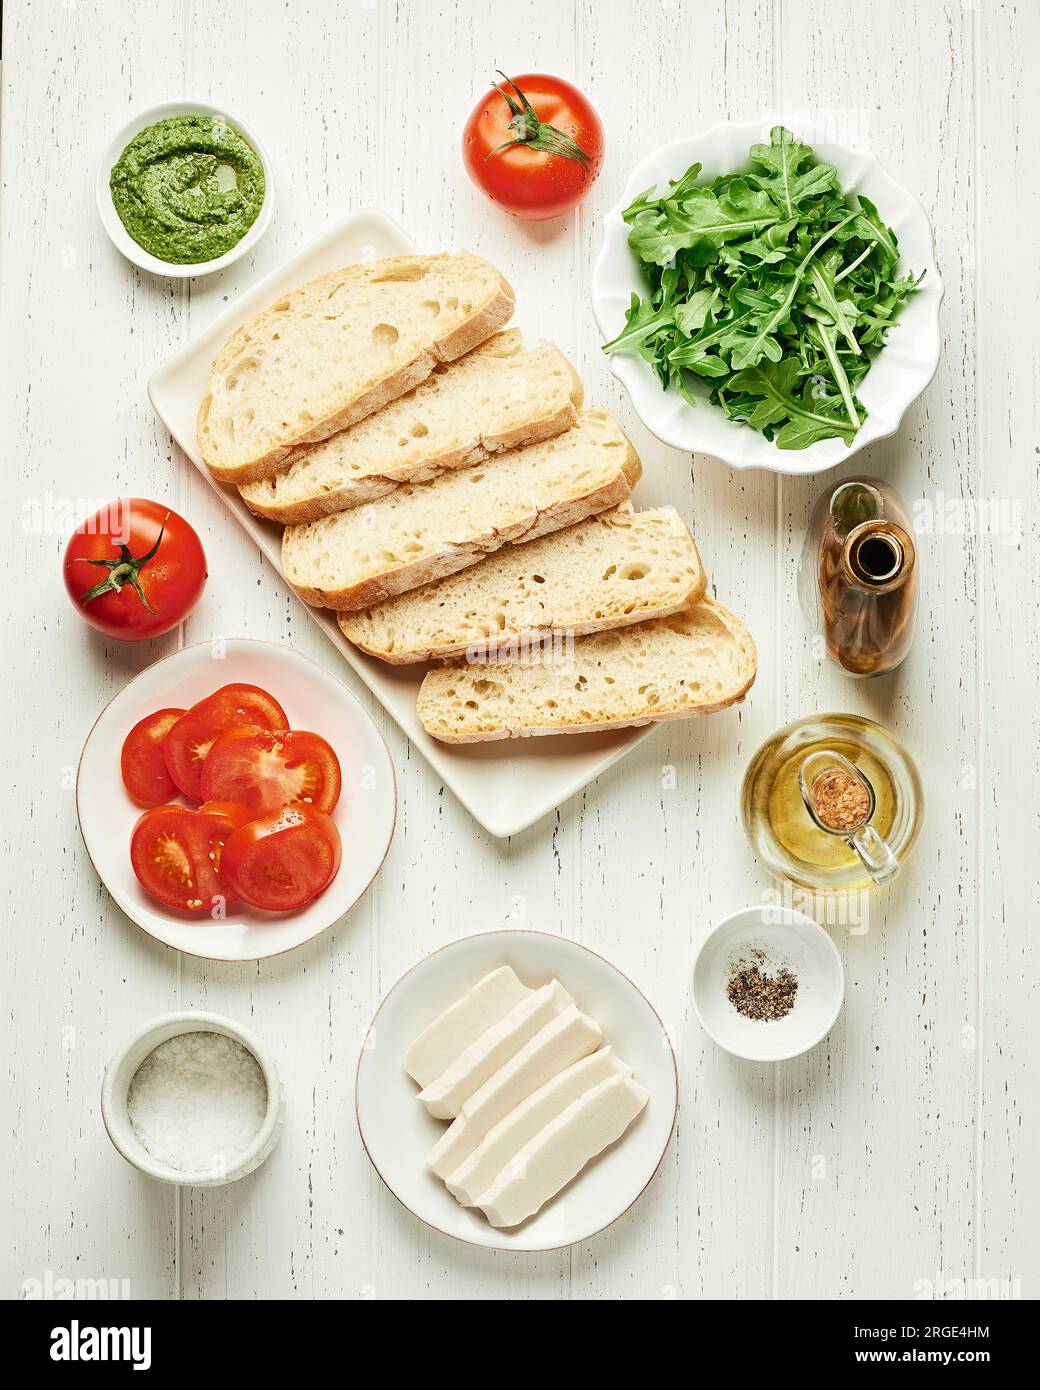 Ingredienti per preparare un sandwich Vegan Caprese Foto Stock